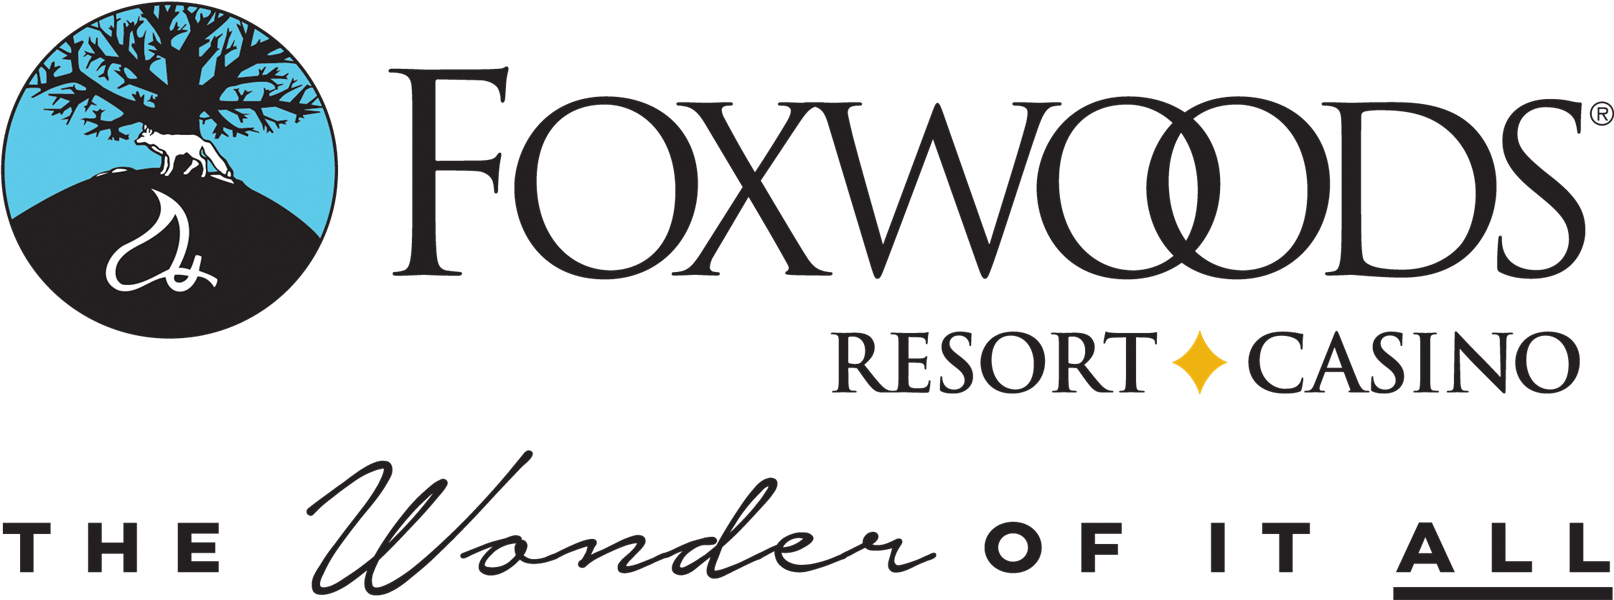 foxwood resort casino address